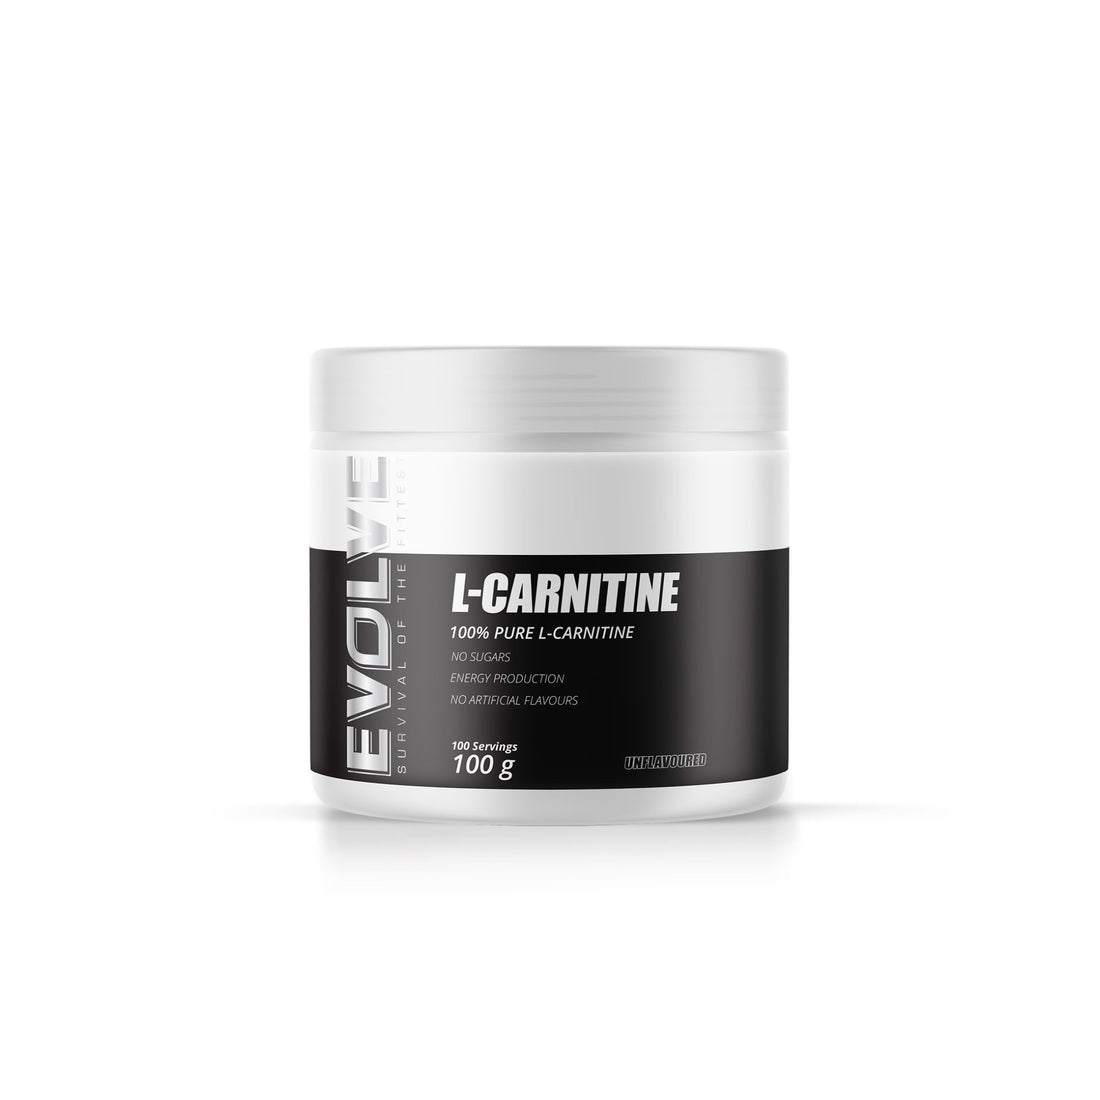 Evolve L-Carnitine